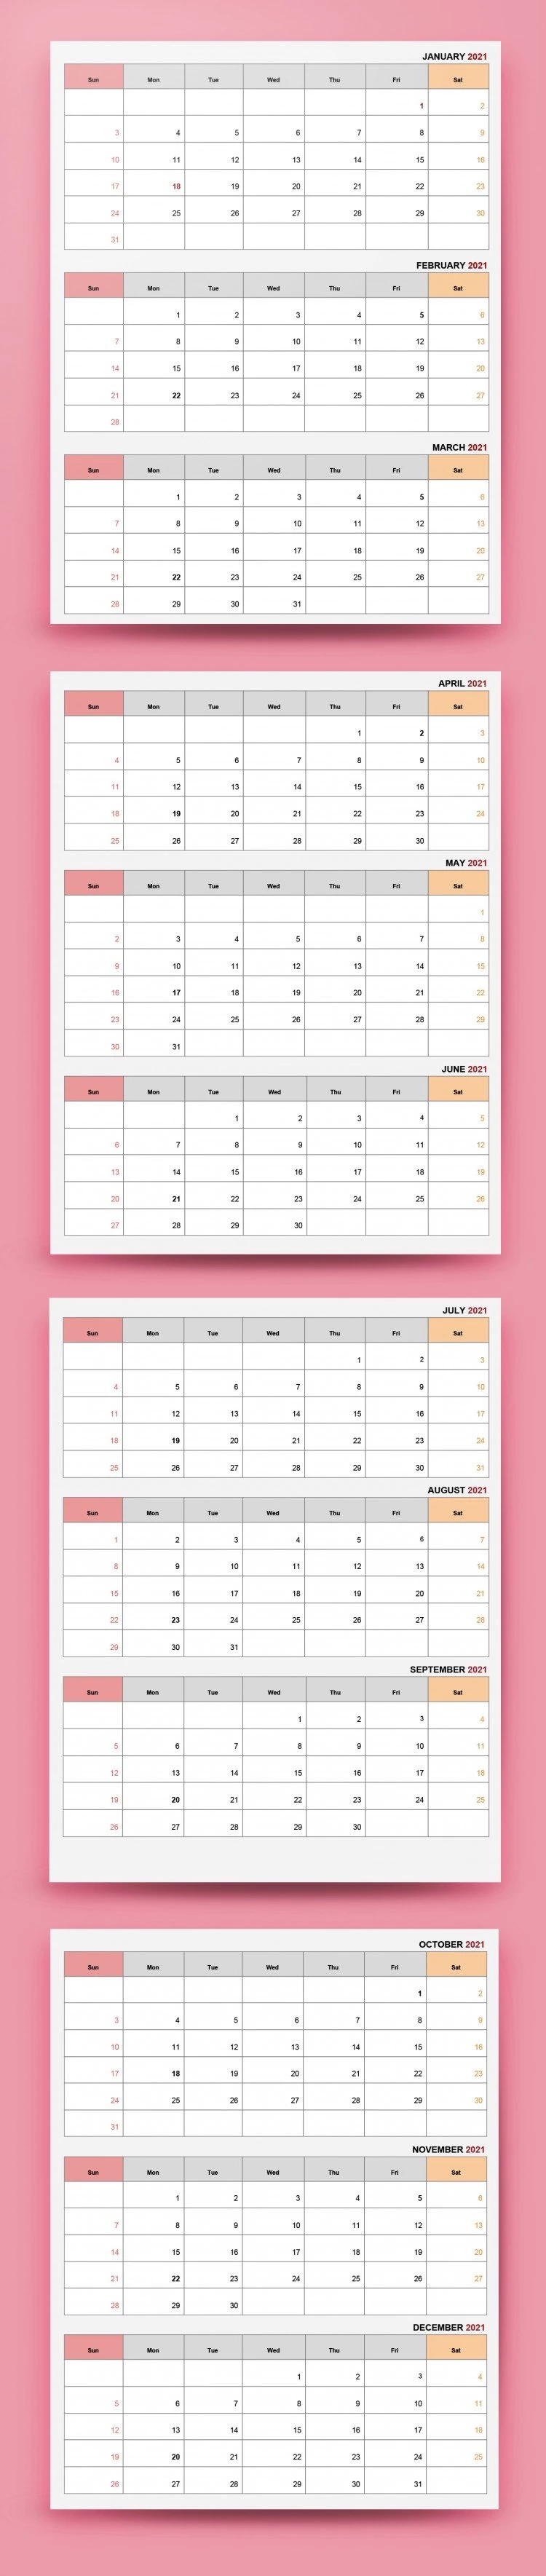 Calendario trimestrale rosa 2021 - free Google Docs Template - 10061571